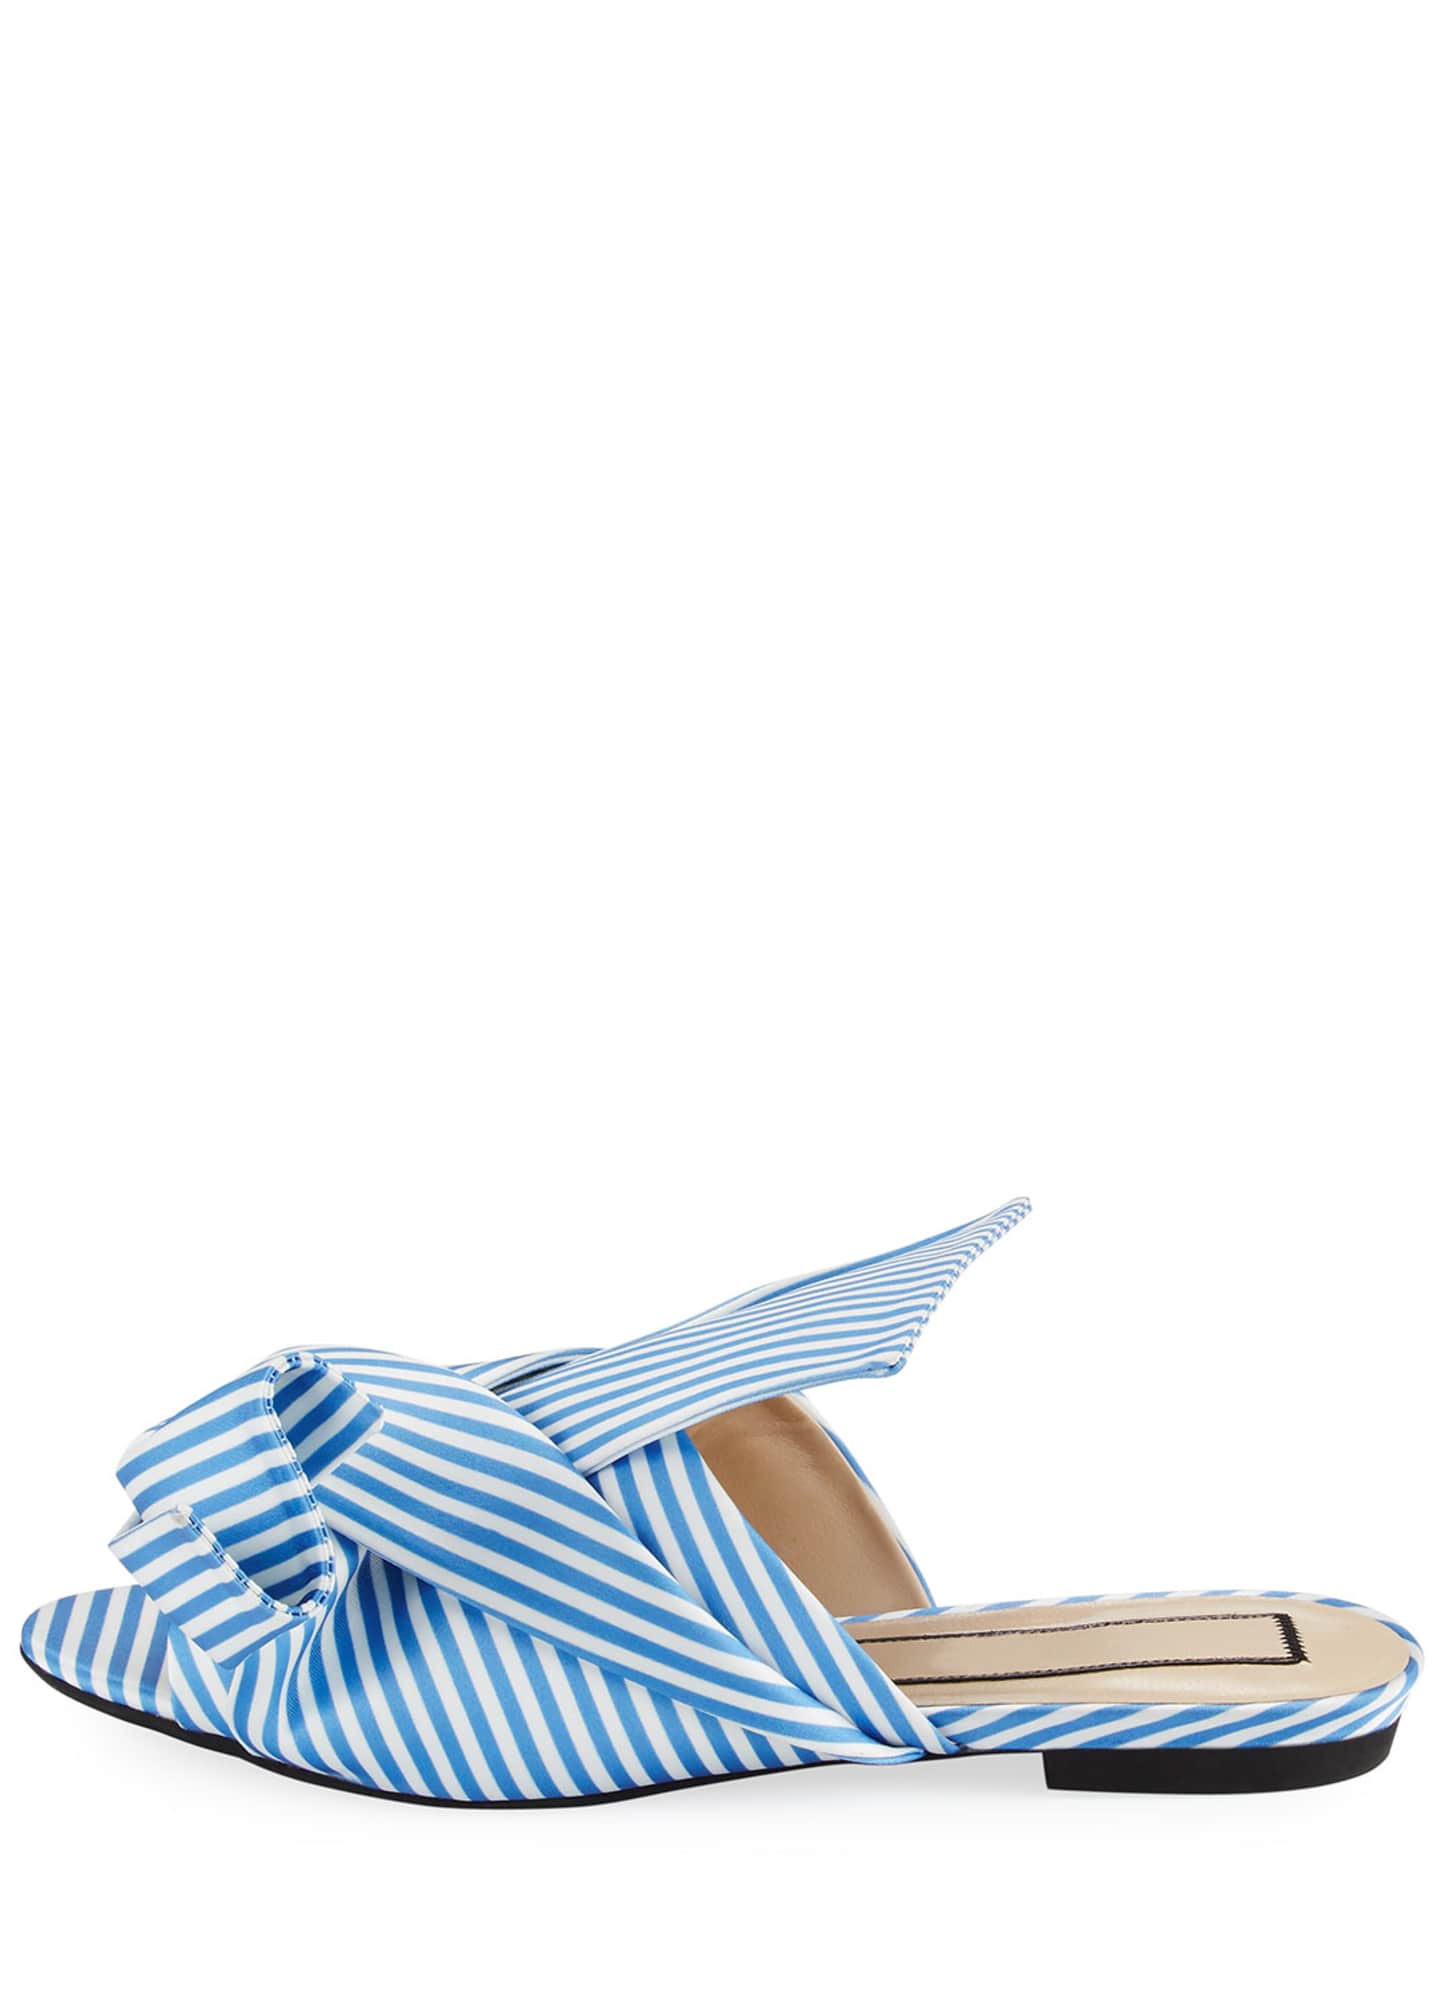 No. 21 Striped Seersucker Satin Slide Sandal, White/Blue - Bergdorf Goodman